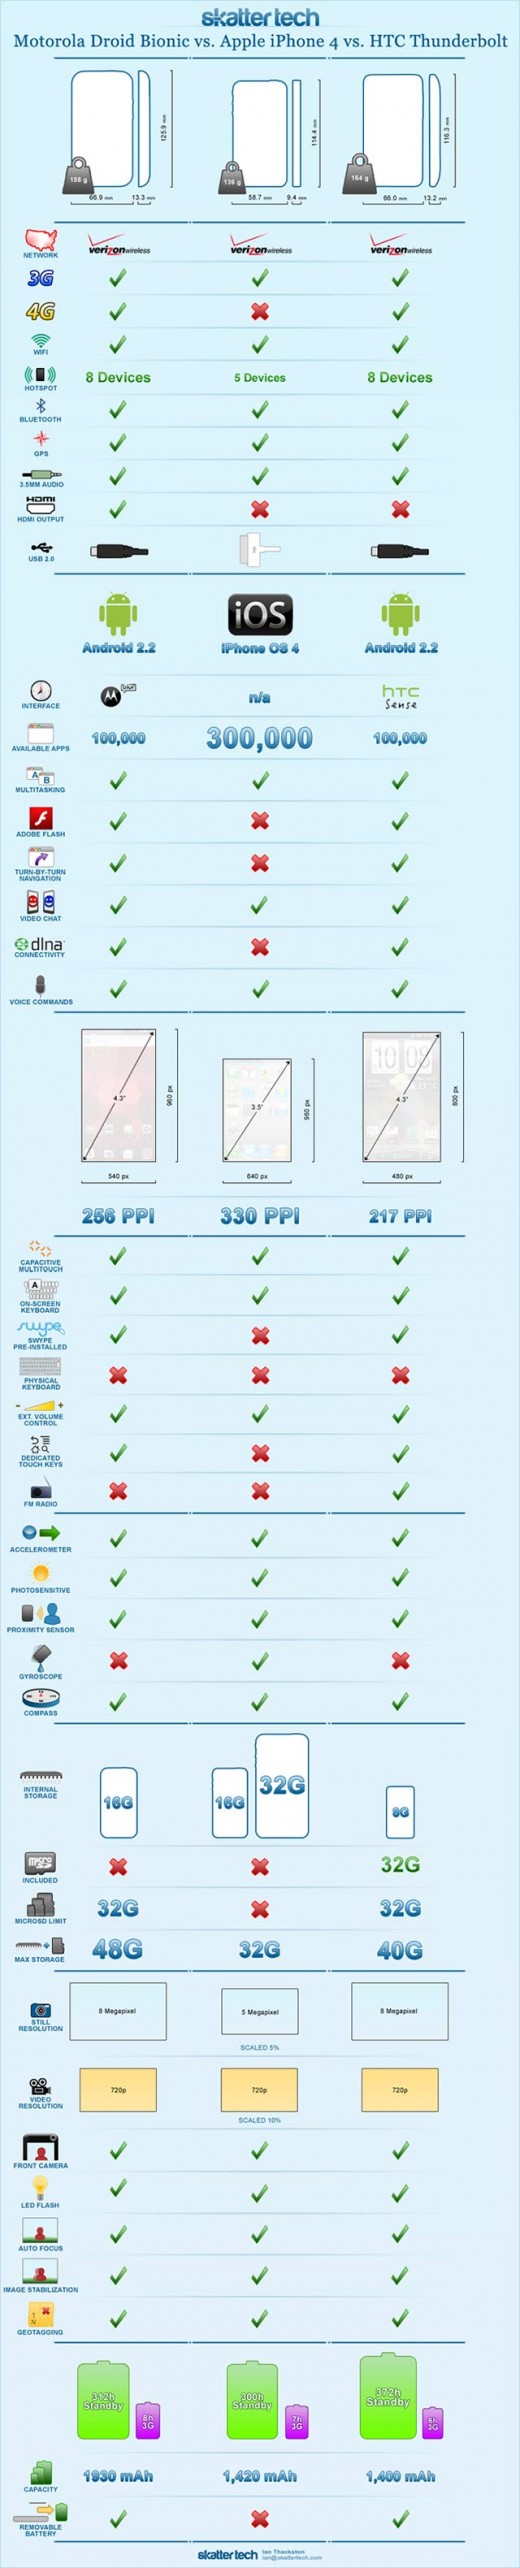 Infographic: Motorola Droid Bionic vs. iPhone 4 vs. HTC Thunderbolt